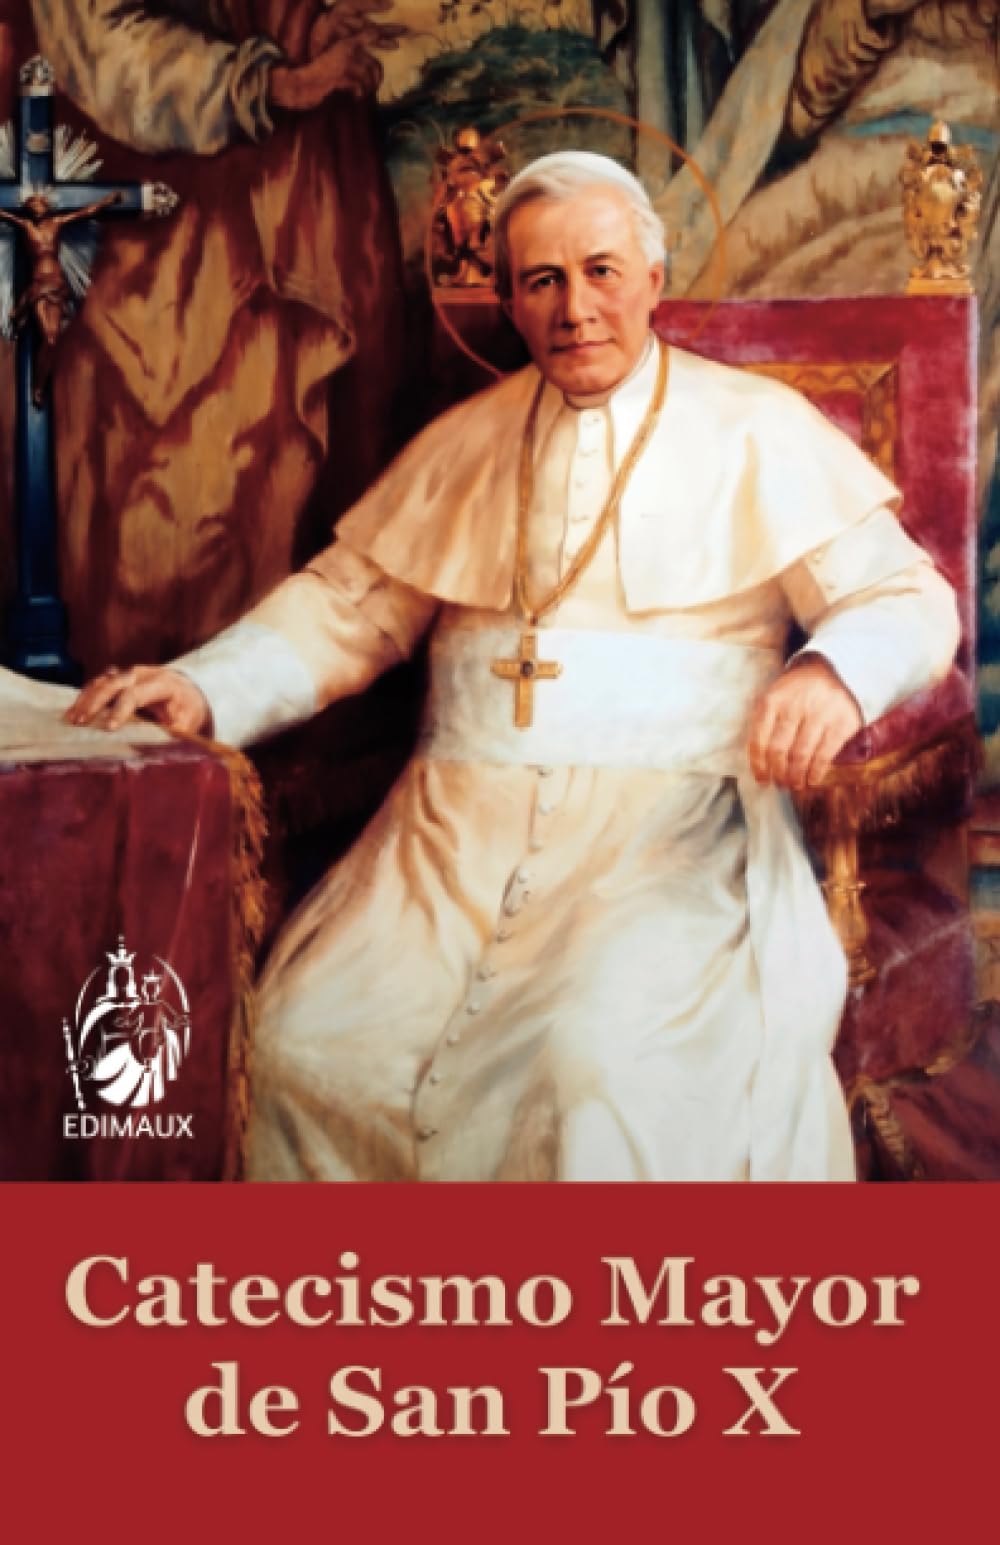 Catecismo Mayor de San Pío X (Spanish Edition)